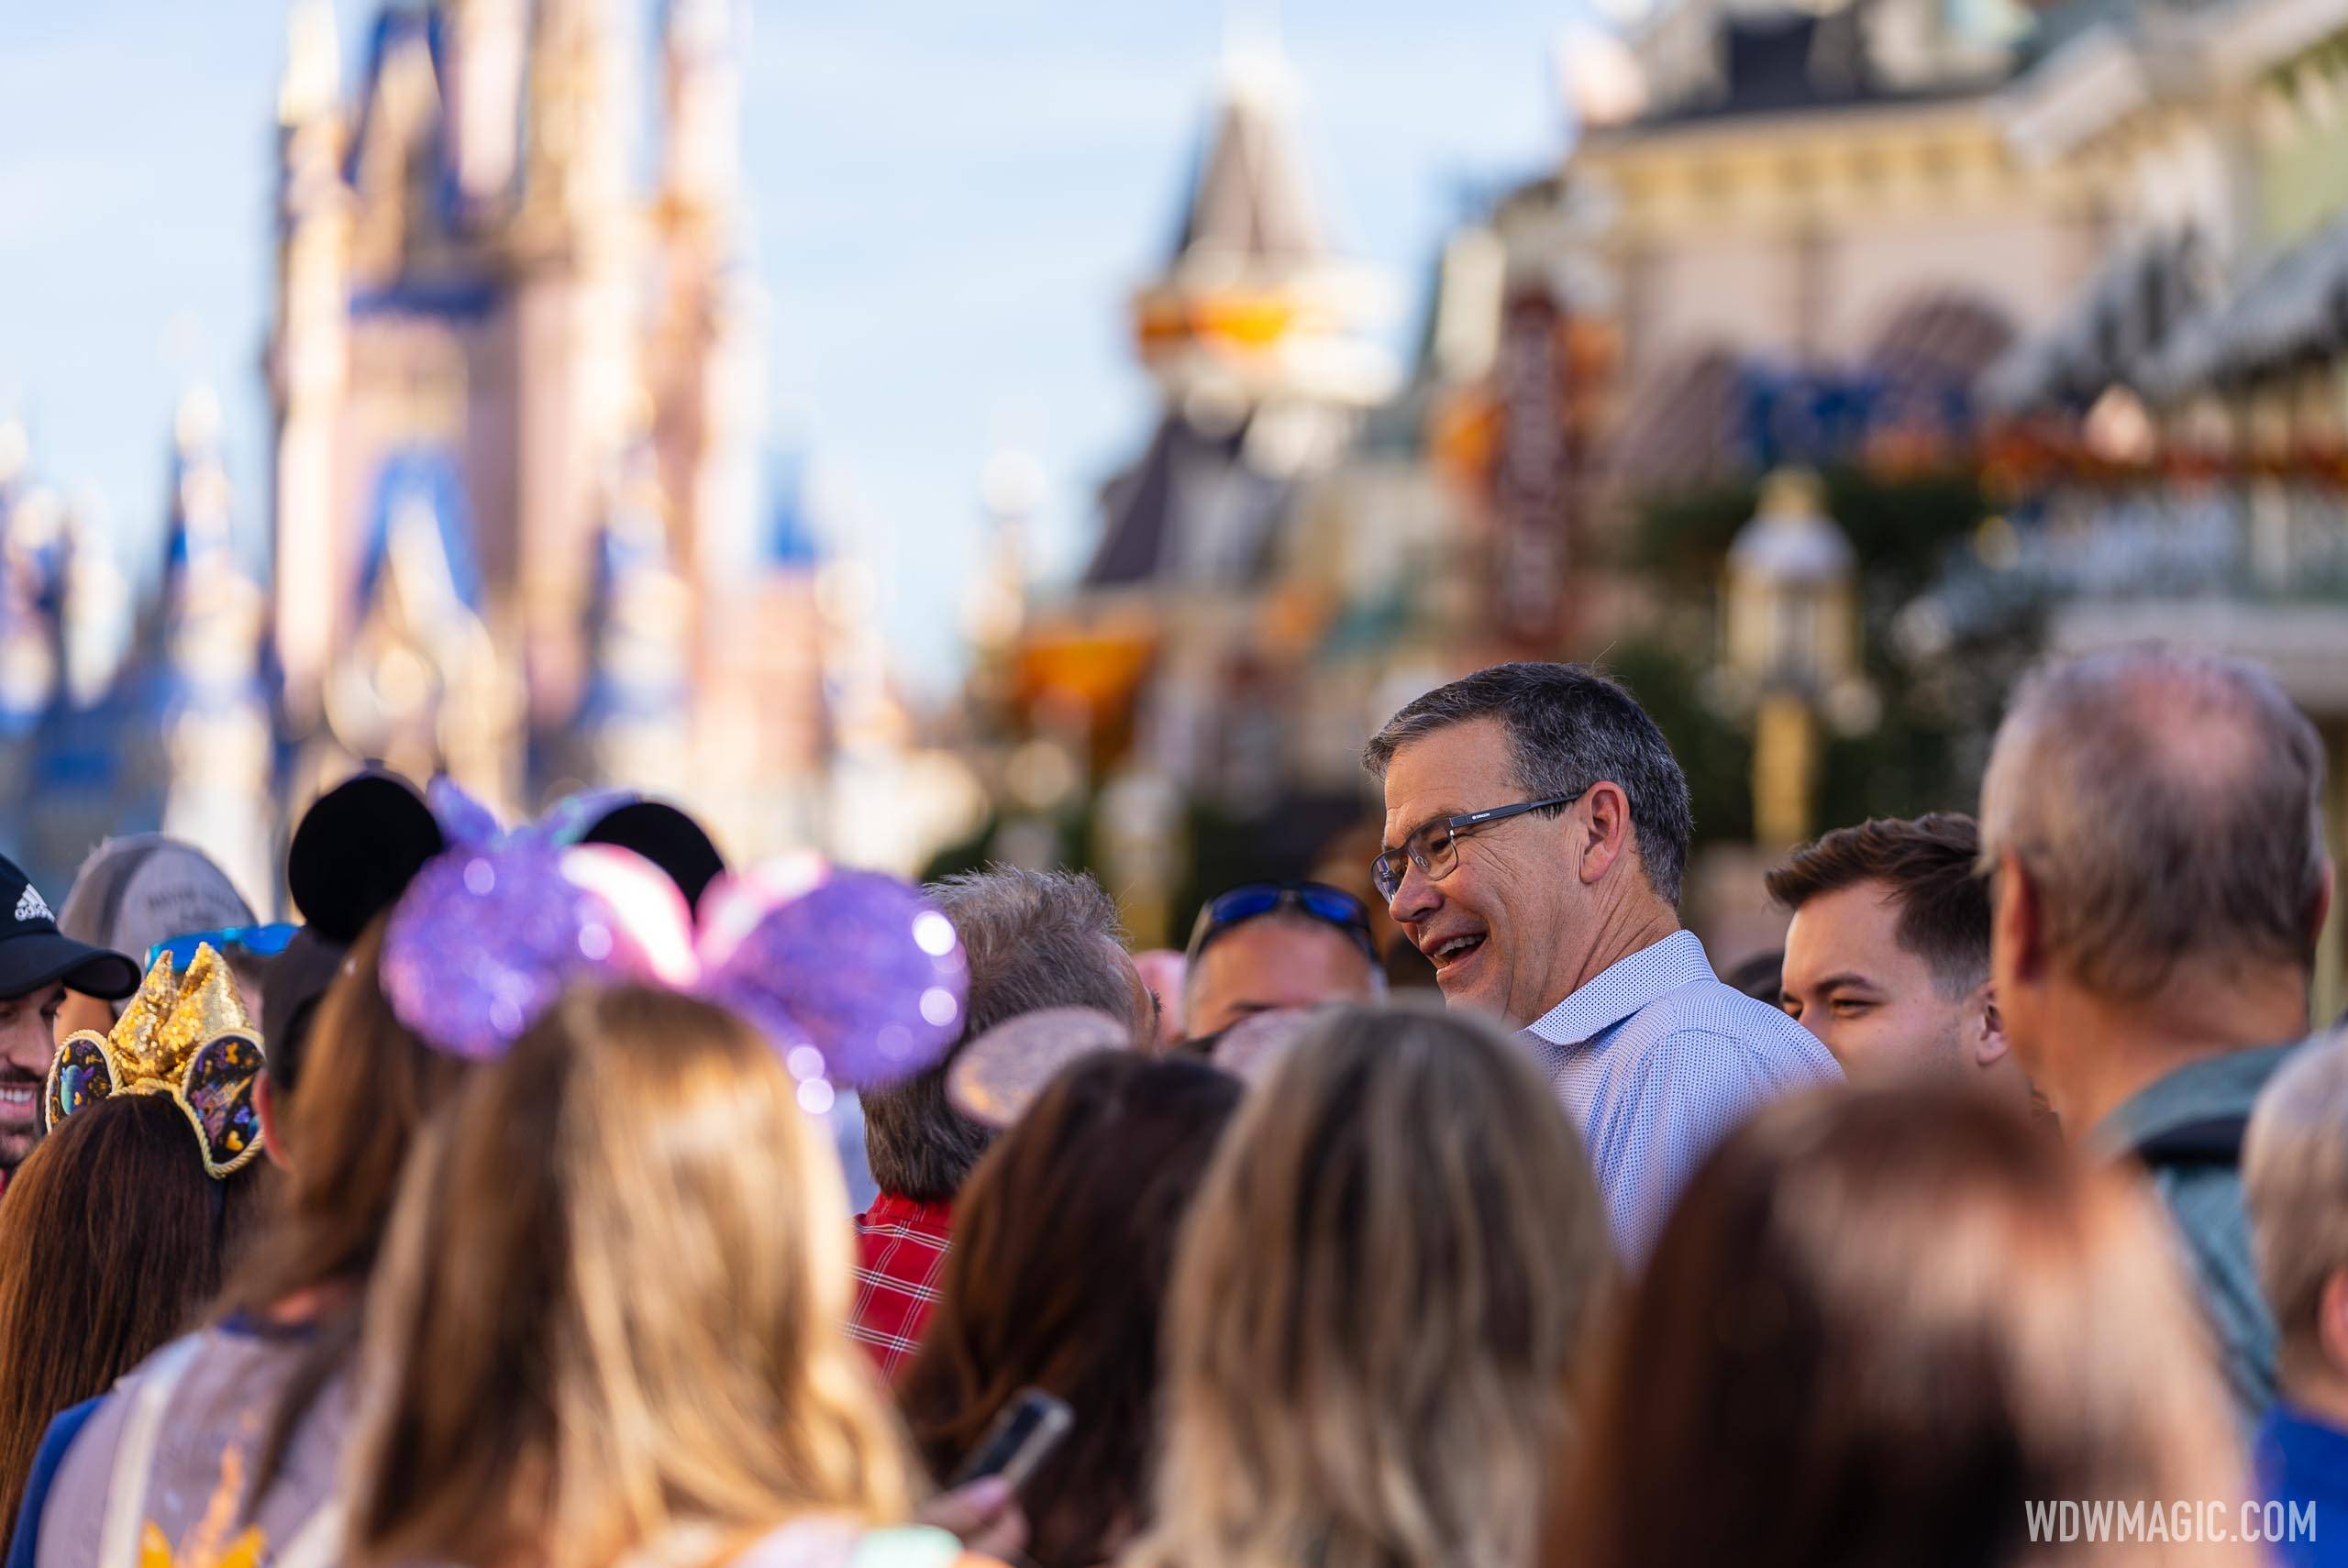 Walt Disney World's 50th Anniversary October 1 events